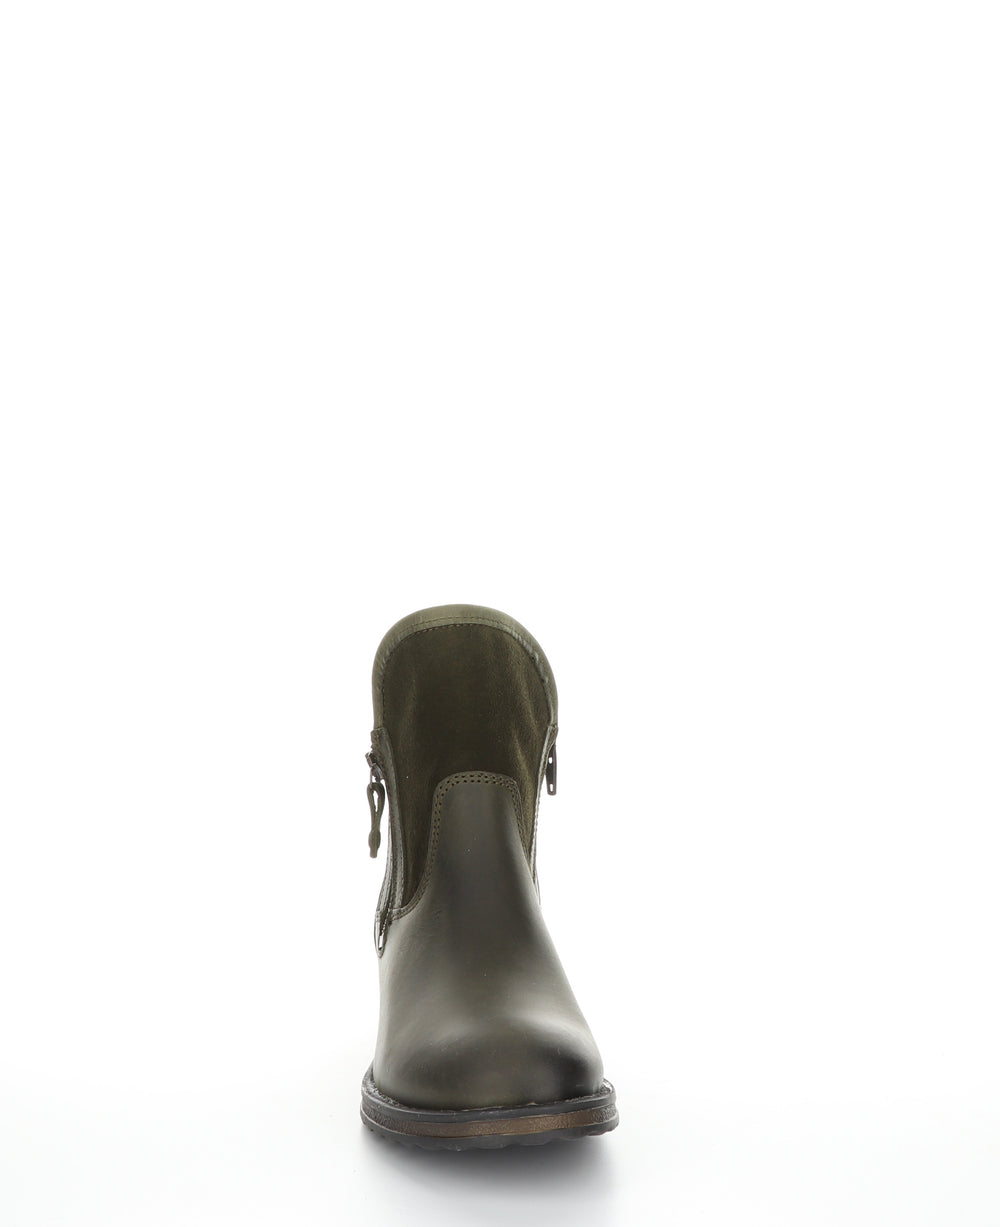 STRIVE Olive Zip Up Ankle Boots|STRIVE Bottines avec Fermeture Zippée in Vert